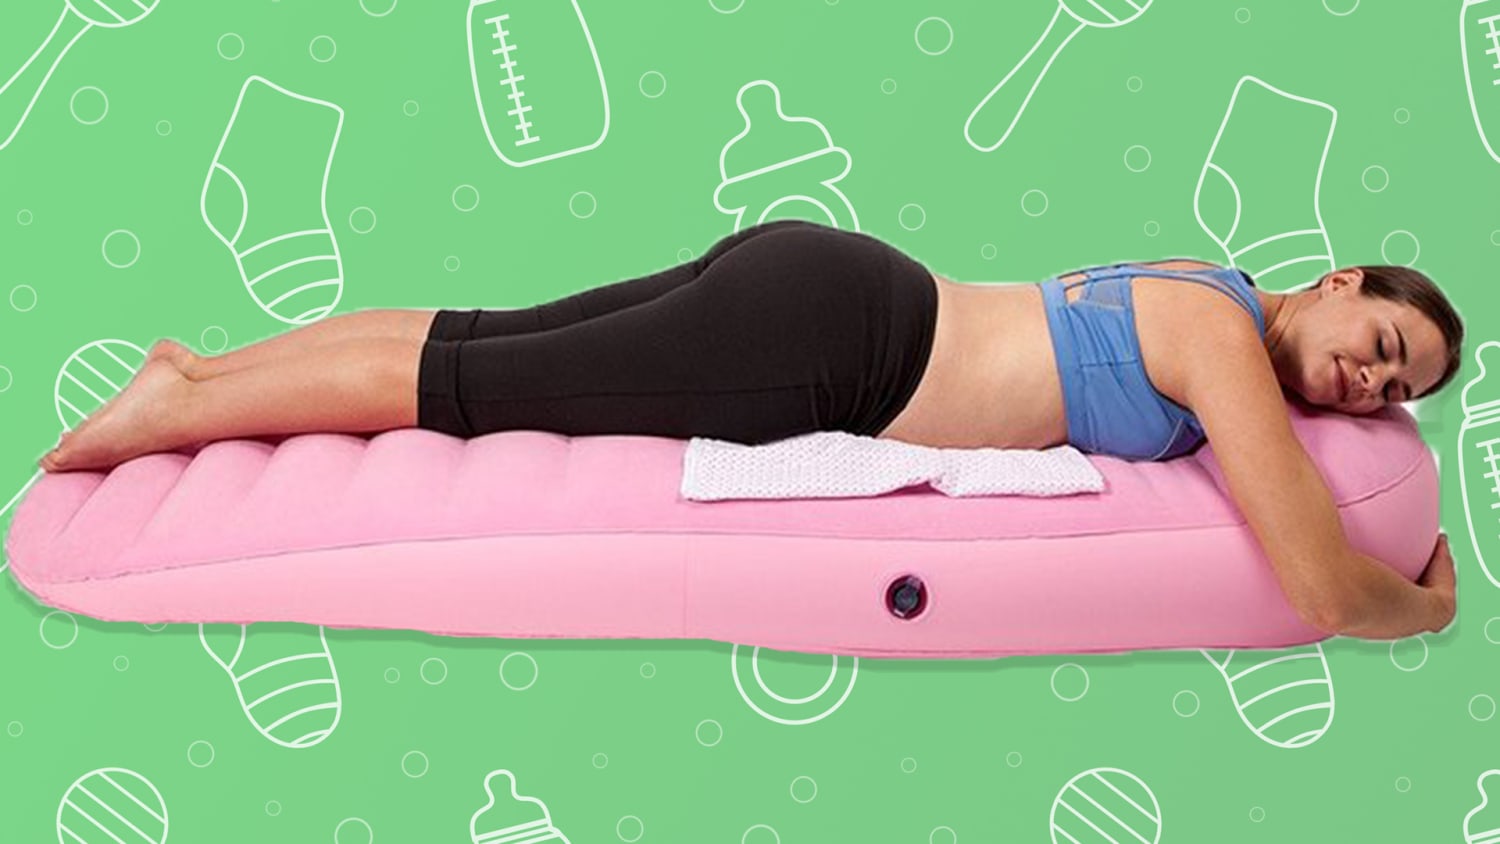 The Cozy Bump pillow helps pregnant women stomach-sleep